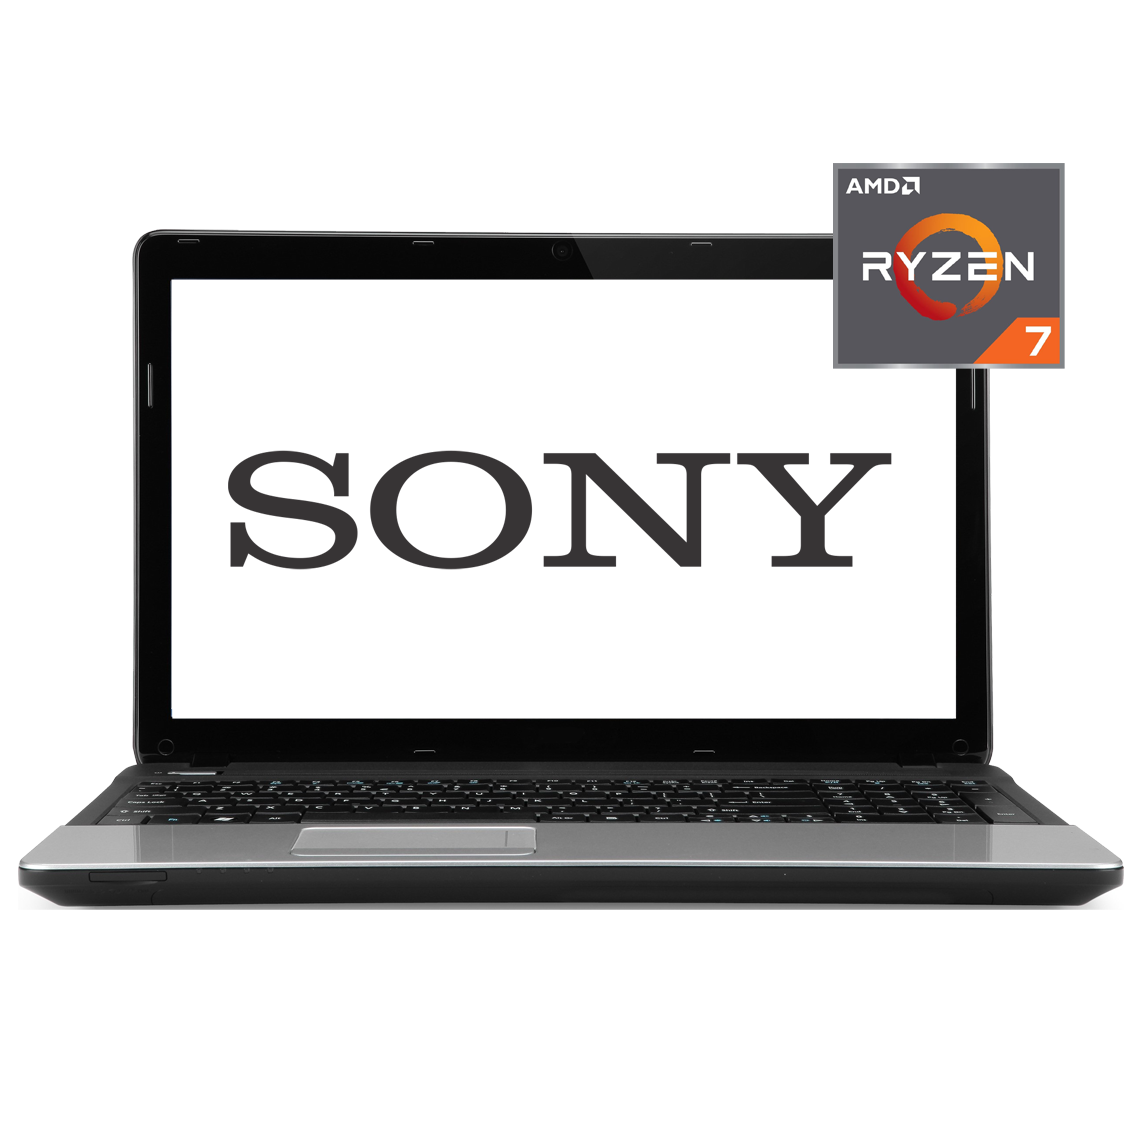 Sony - 13.3 inch AMD Ryzen 7